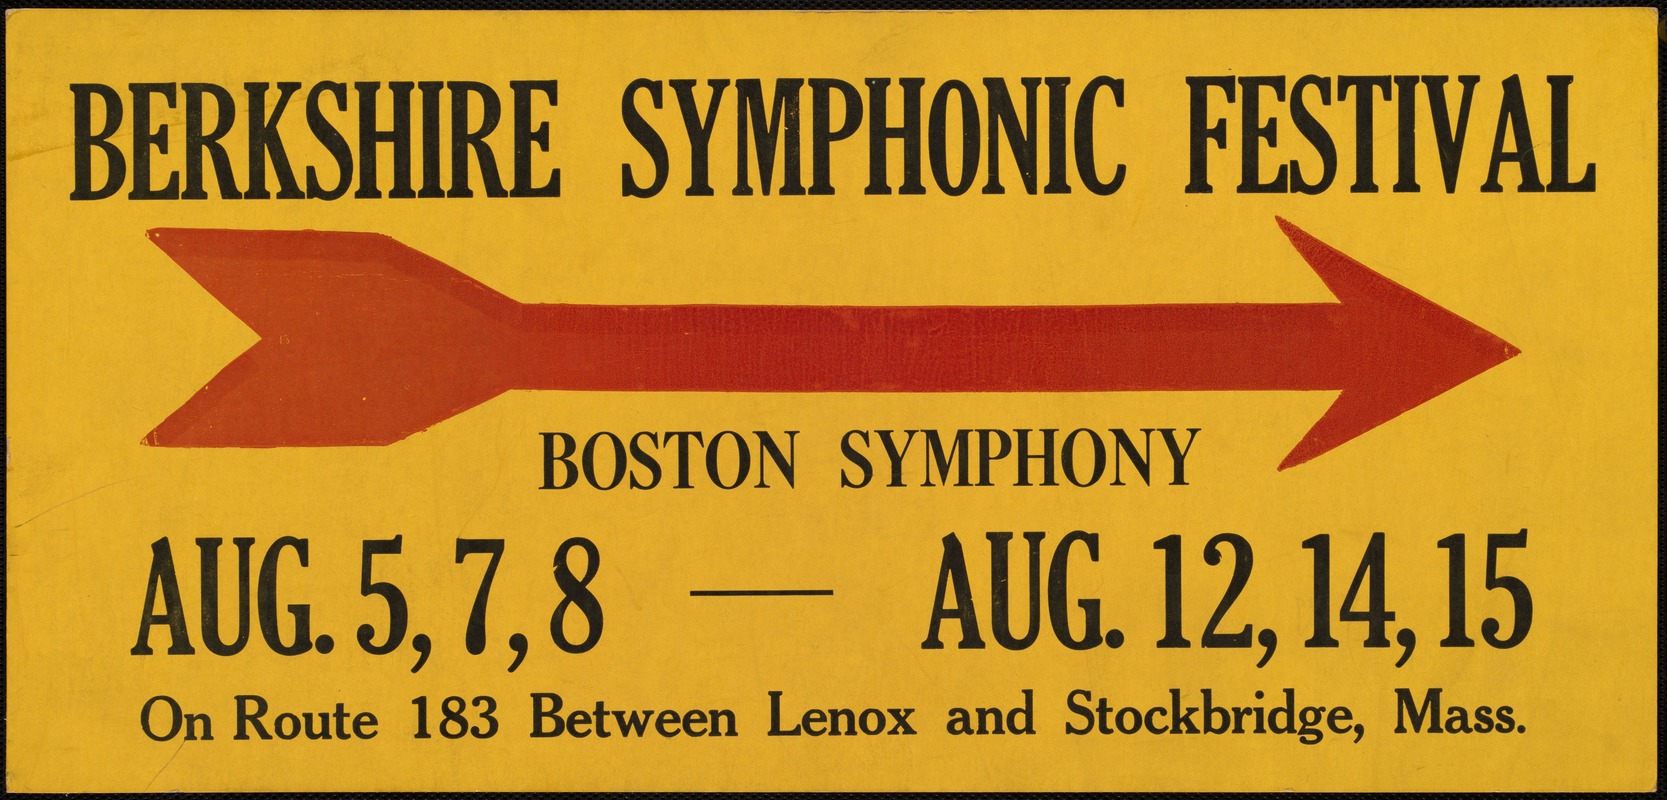 Berkshire Symphonic Festival: directional sign